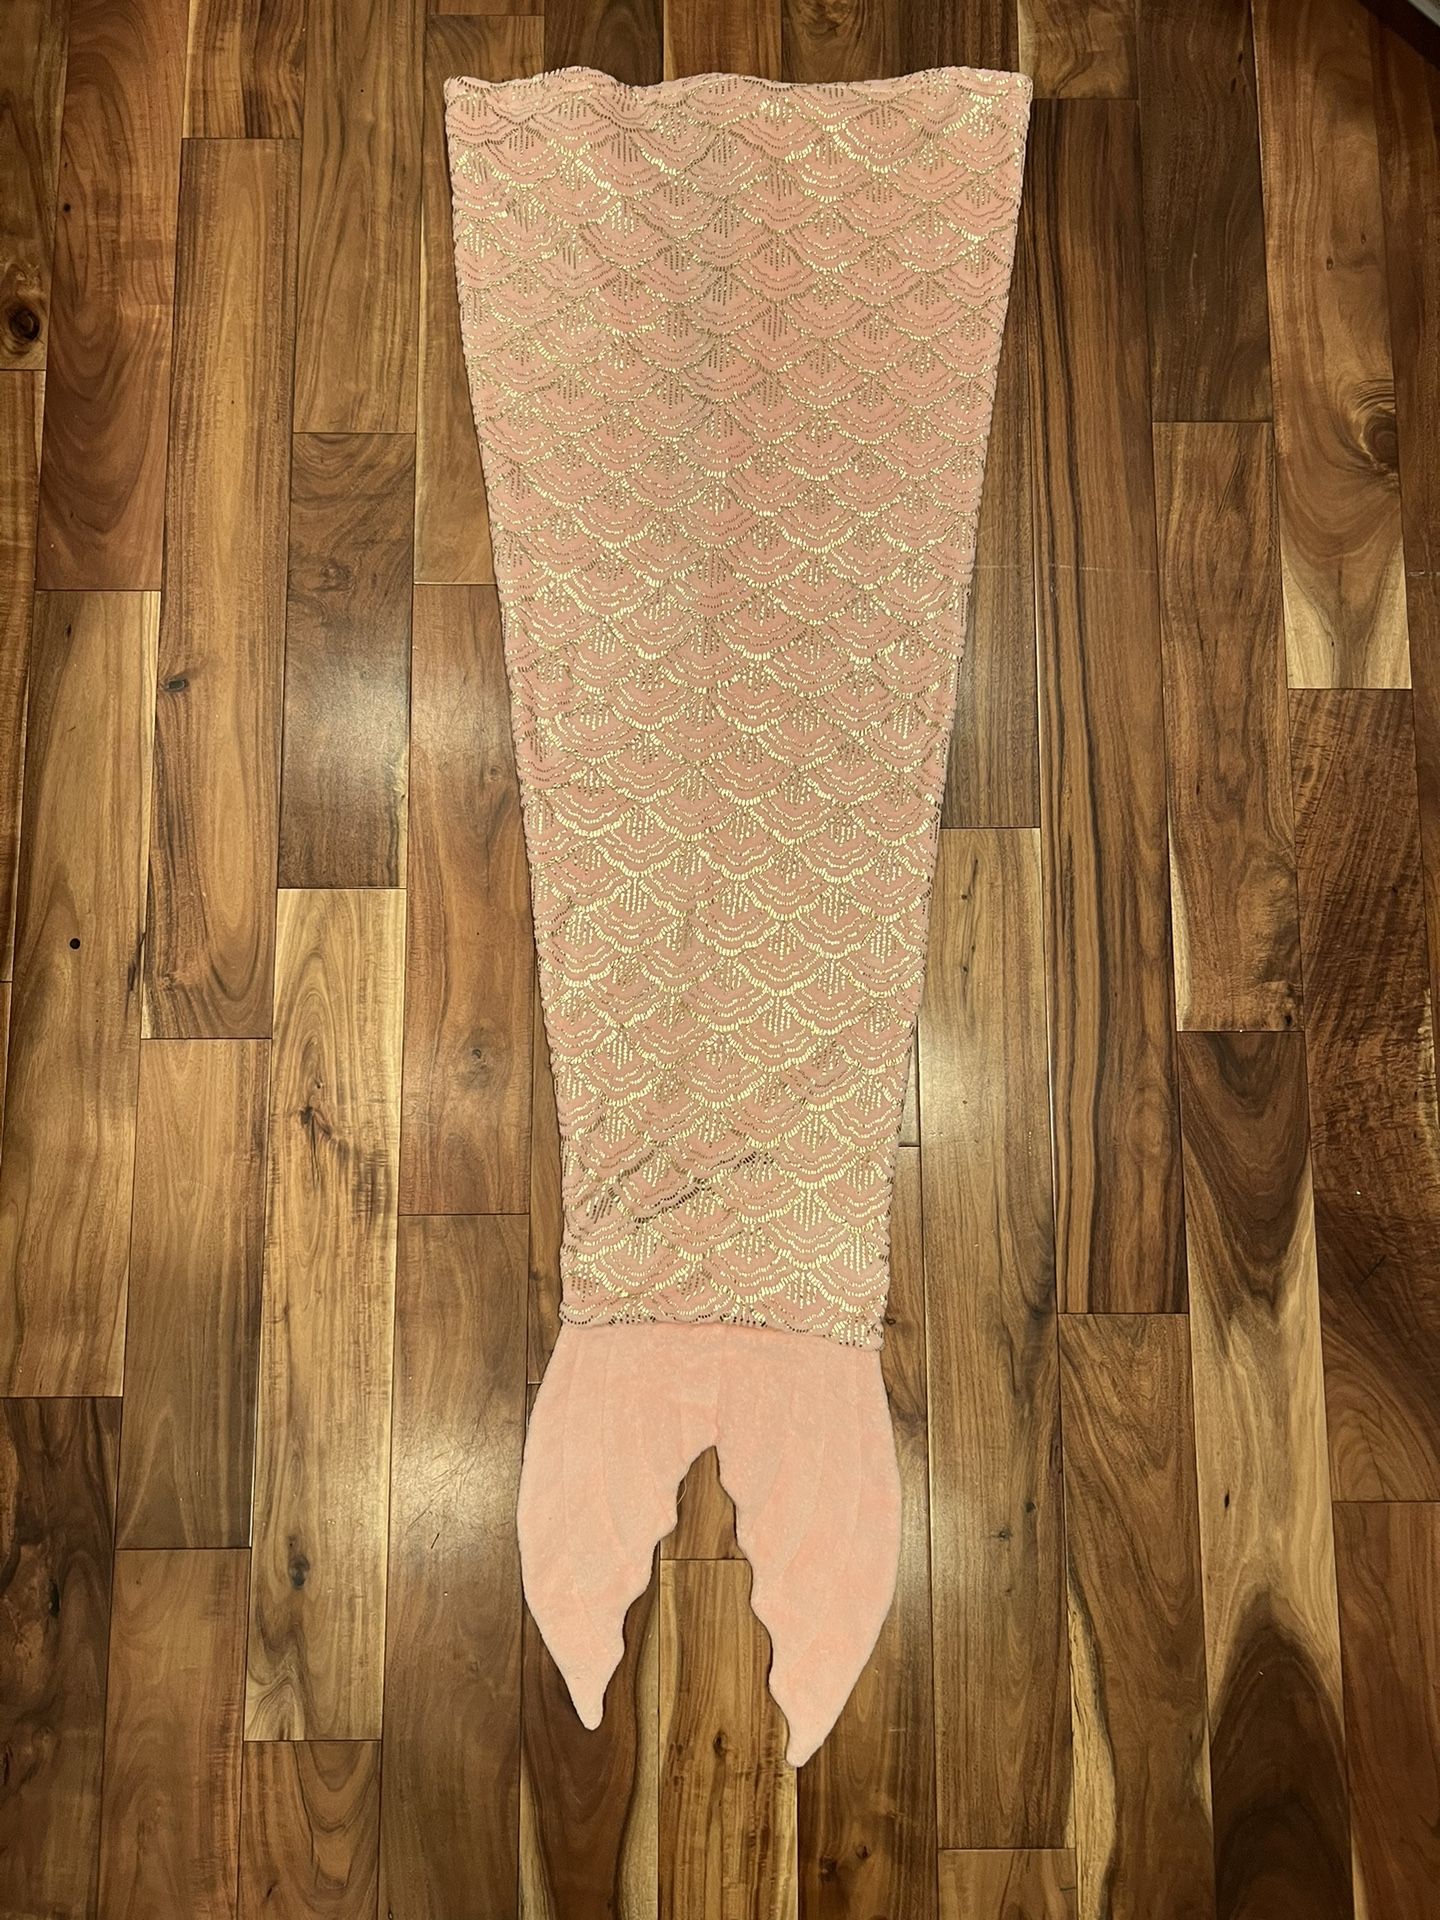 Childs Mermaid Tail Blanket